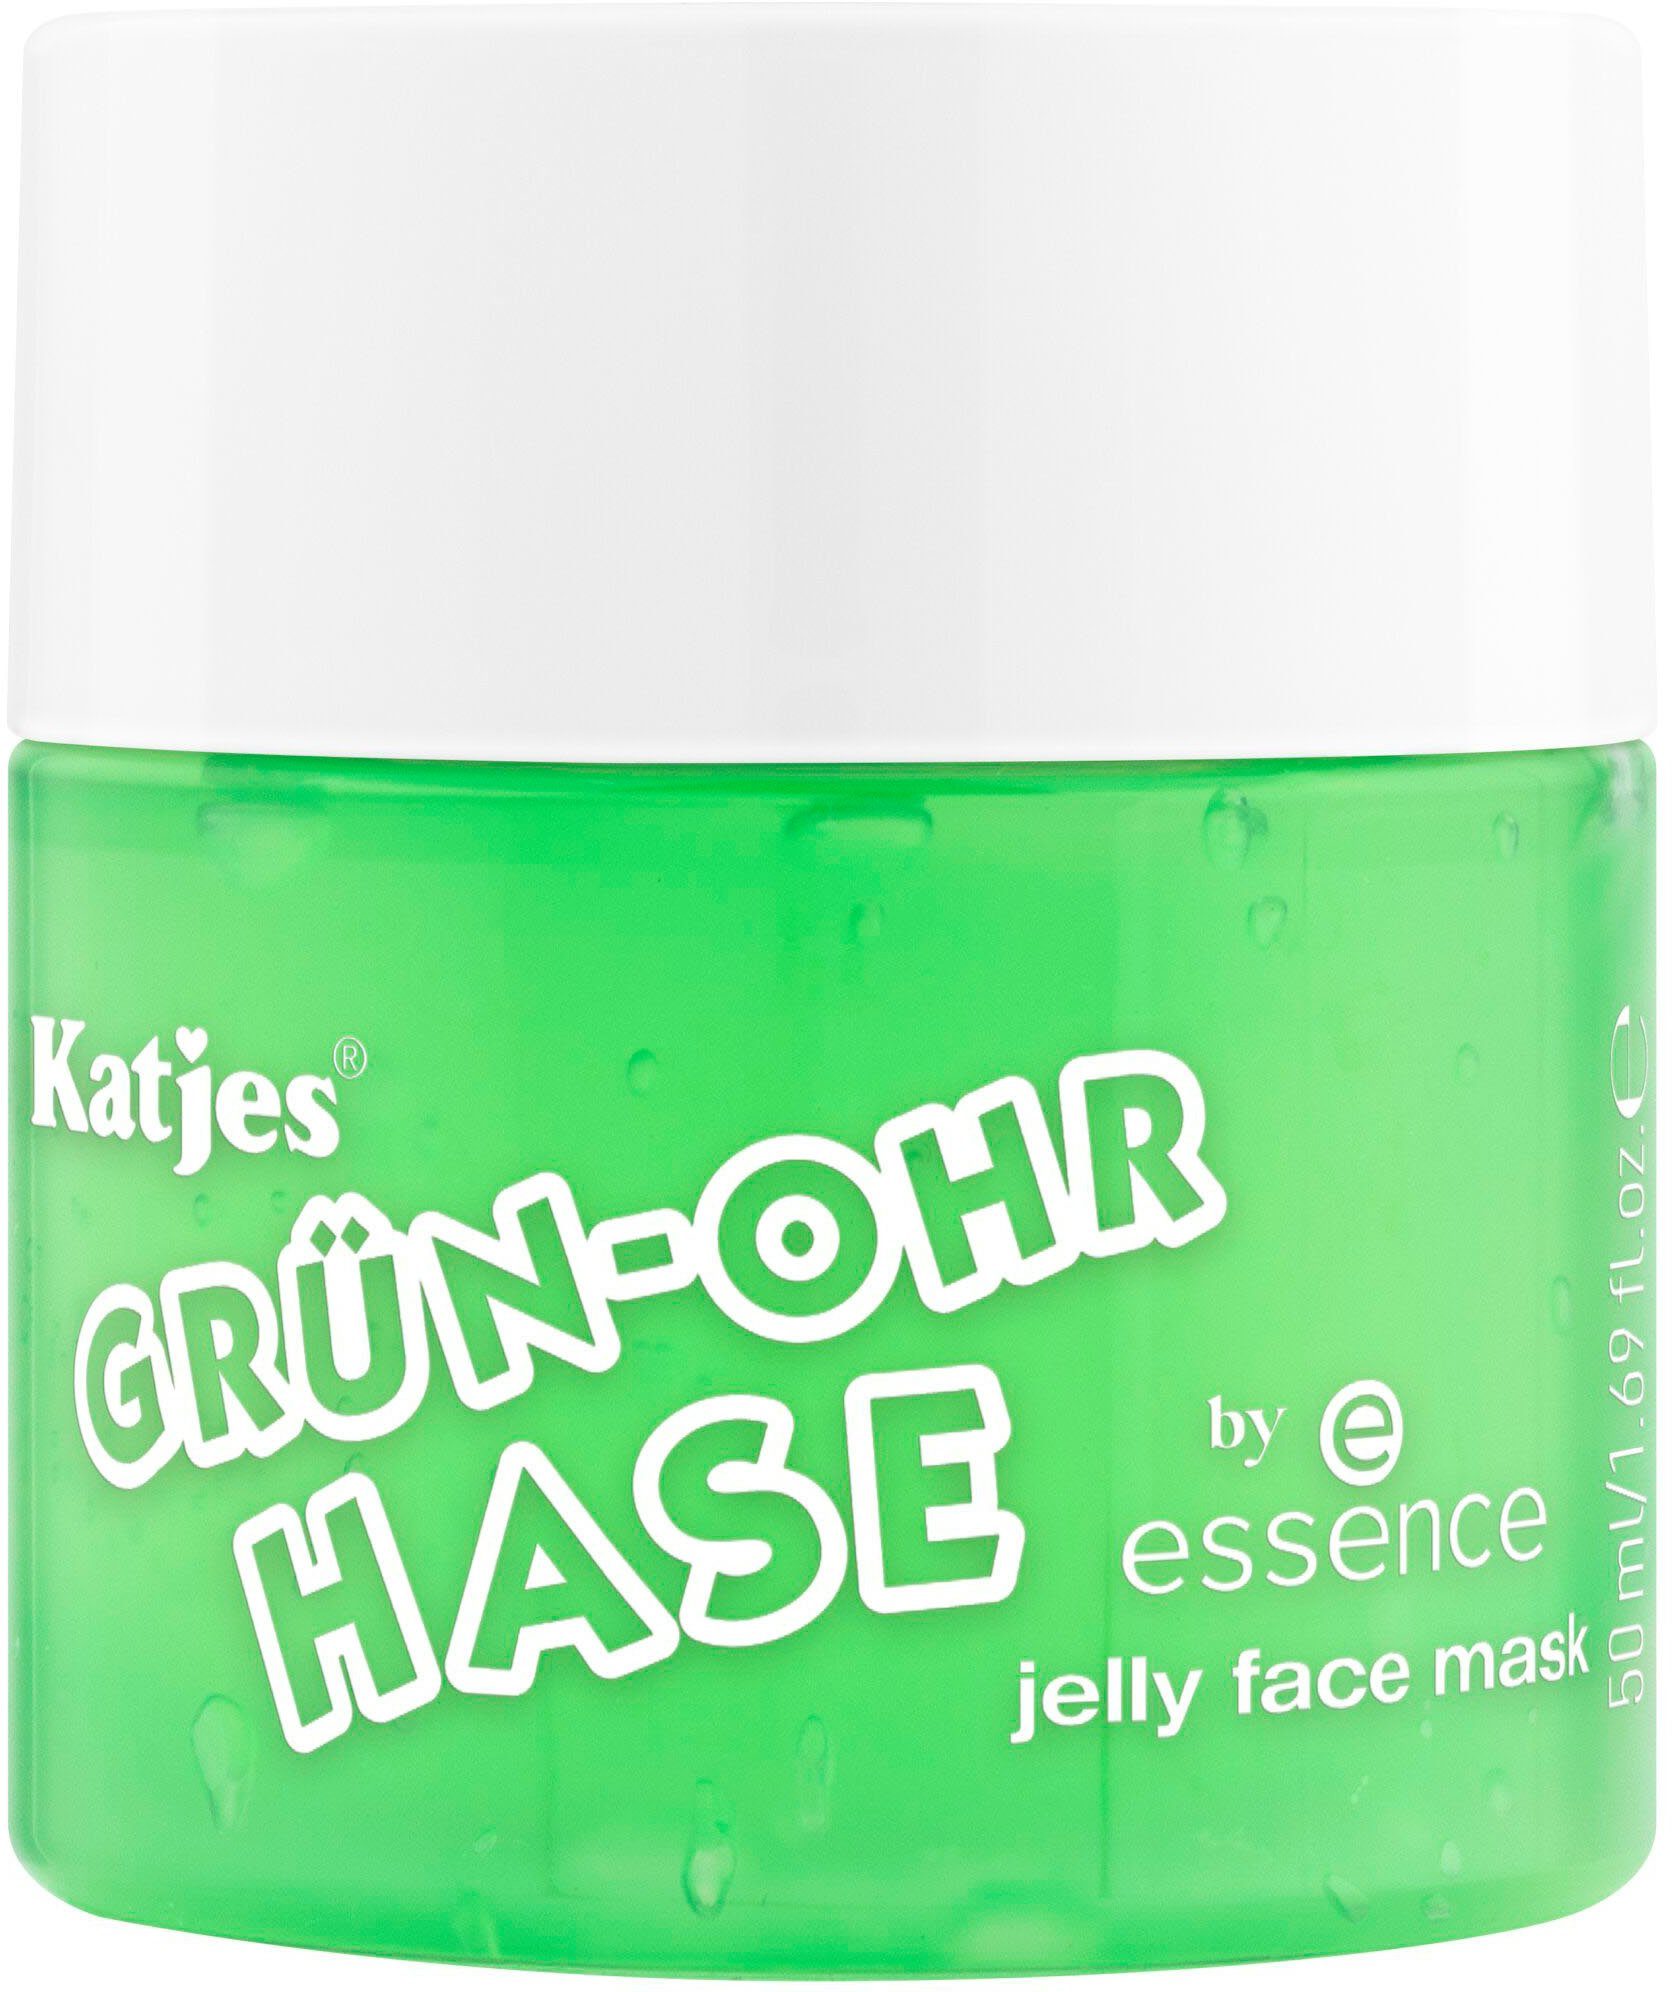 Essence Gesichtsmaske essence jelly face 3-tlg. mask Set